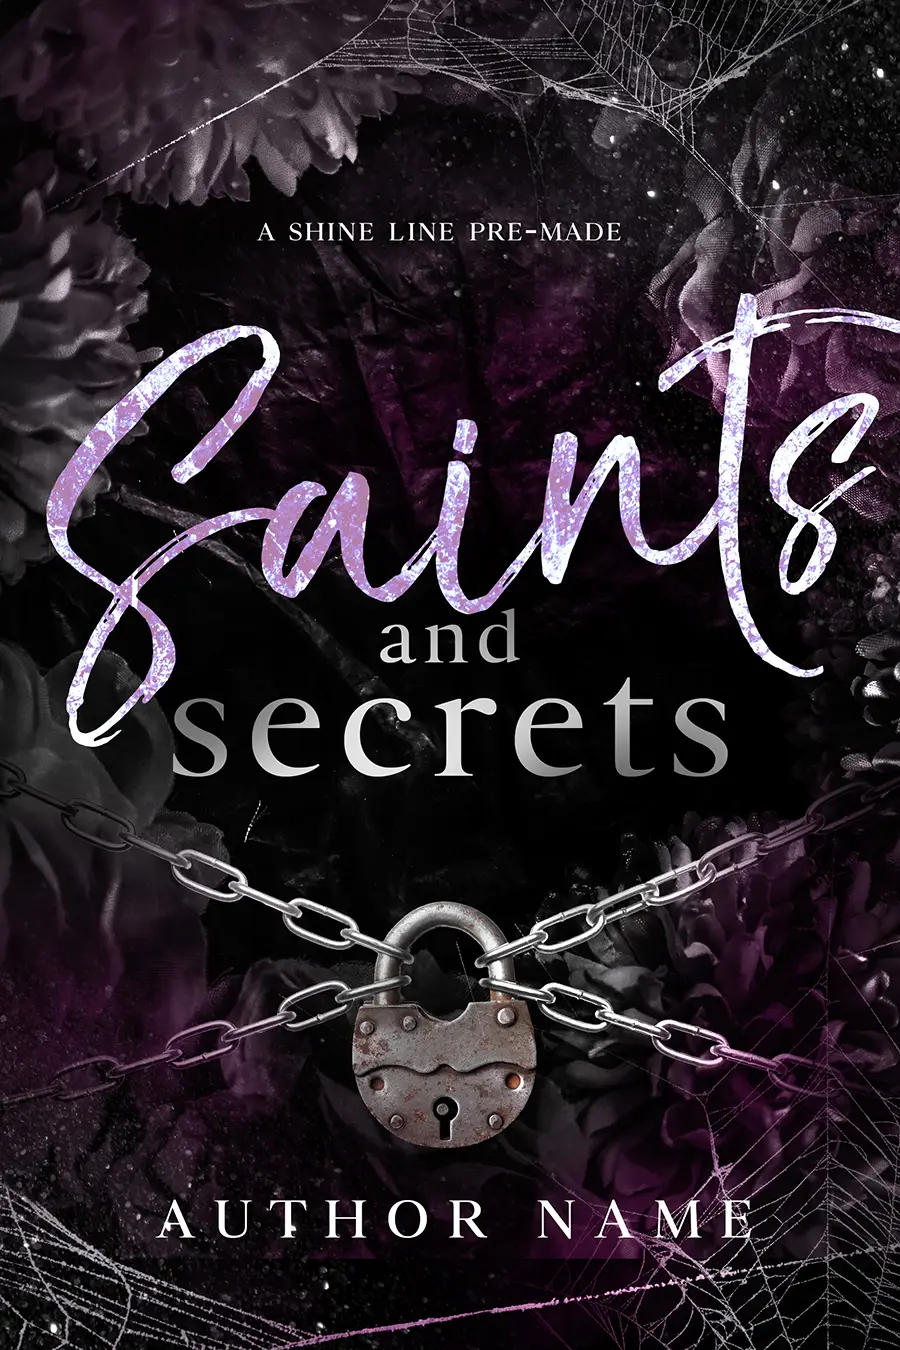 Saints and Secrets